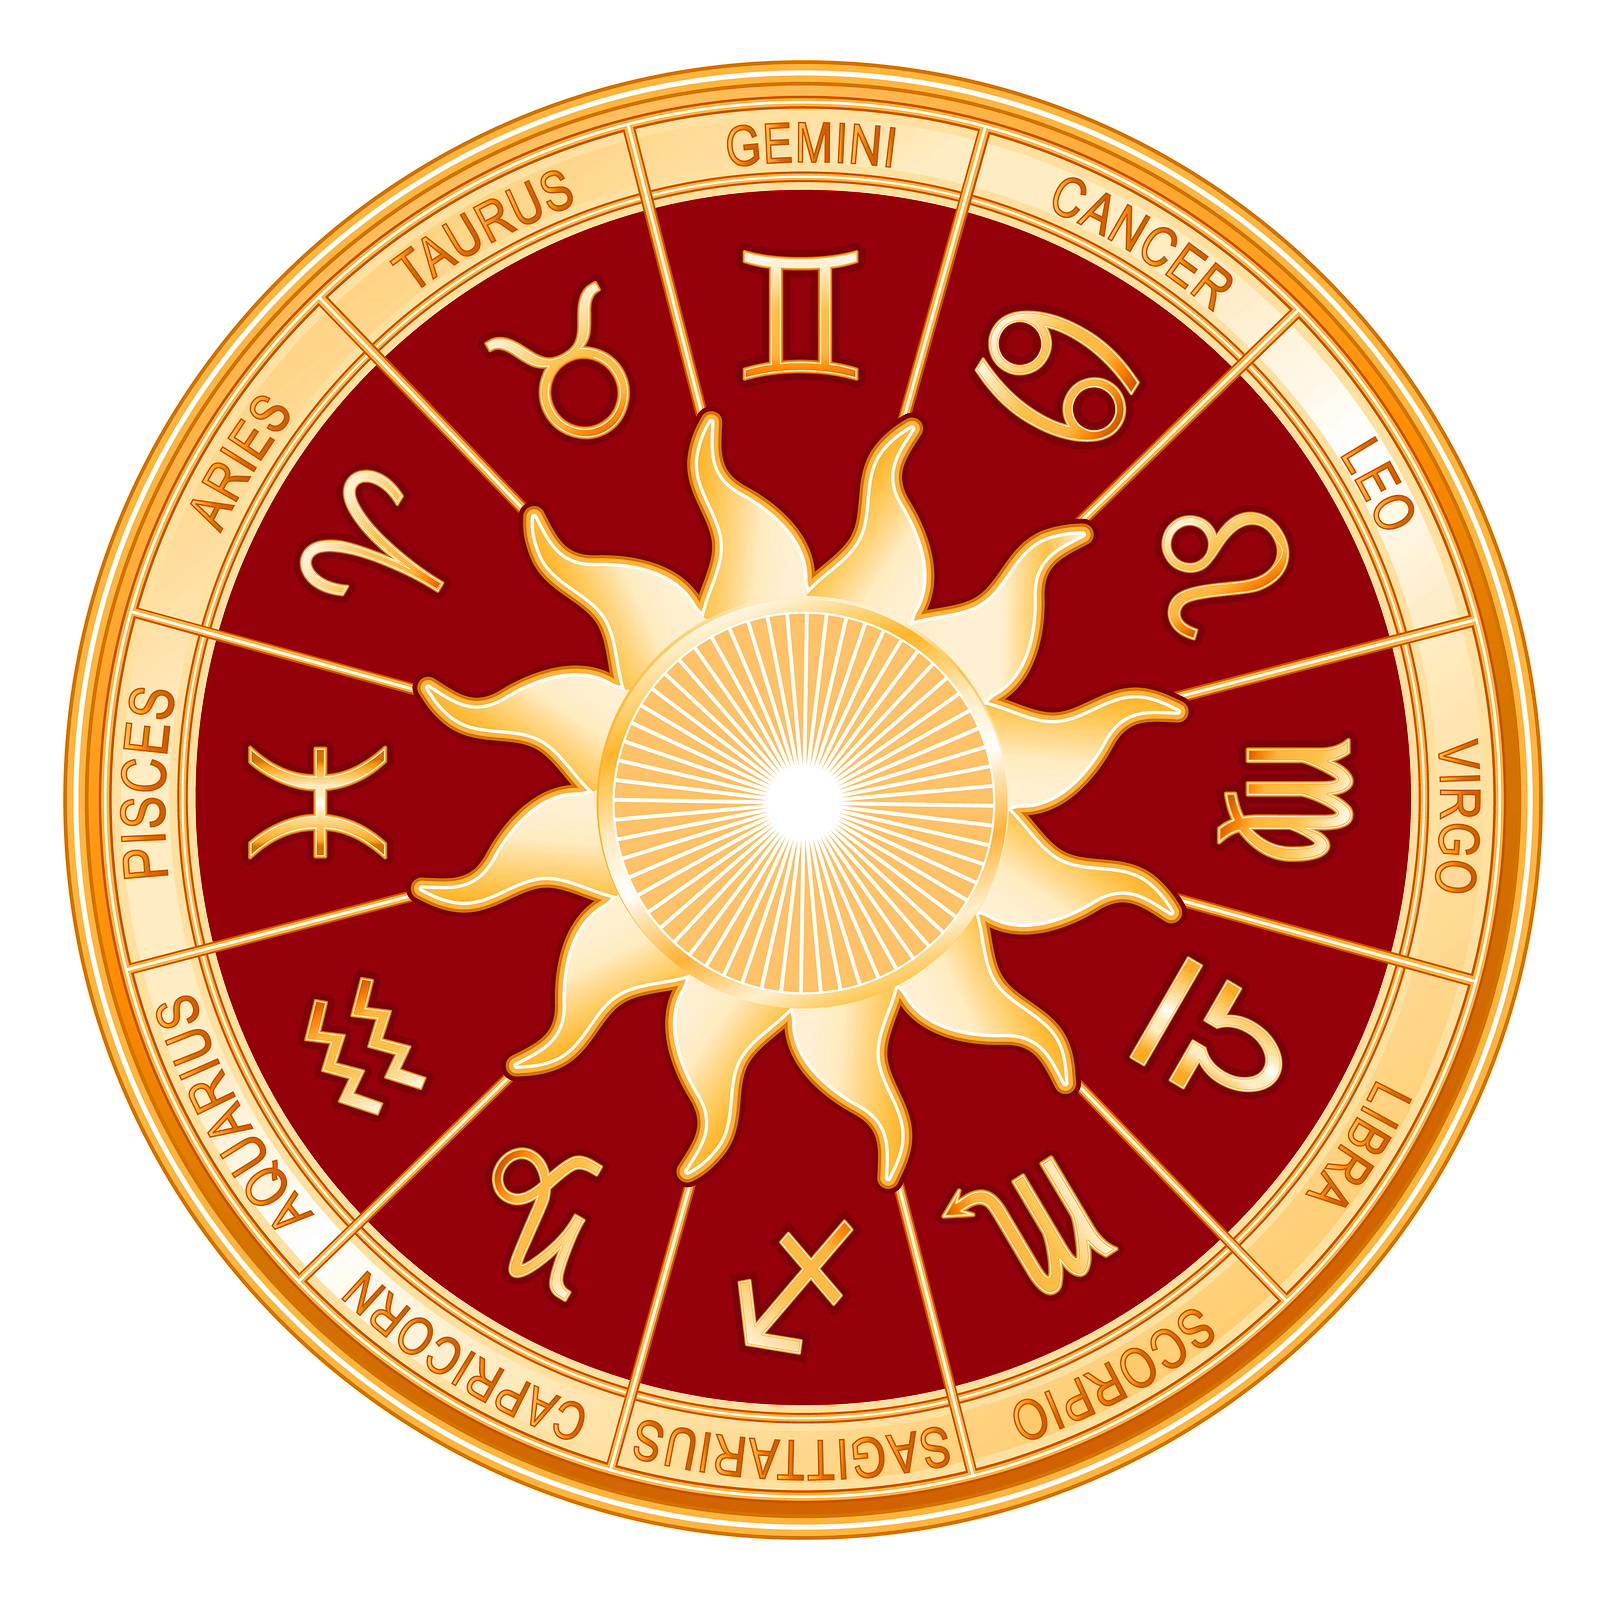 Oracle Speaks: ਟੌਰਸ-ਮਿਥੁਨ ਰਾਸ਼ੀ ਵਾਲੇ ਜਾਤਕ ਇਸ ਗੱਲ ਵੱਲ ਜ਼ਰੂਰ ਦੇਣ ਧਿਆਨ, ਪੜ੍ਹੋ ਰਾਸ਼ੀਫ਼ਲ